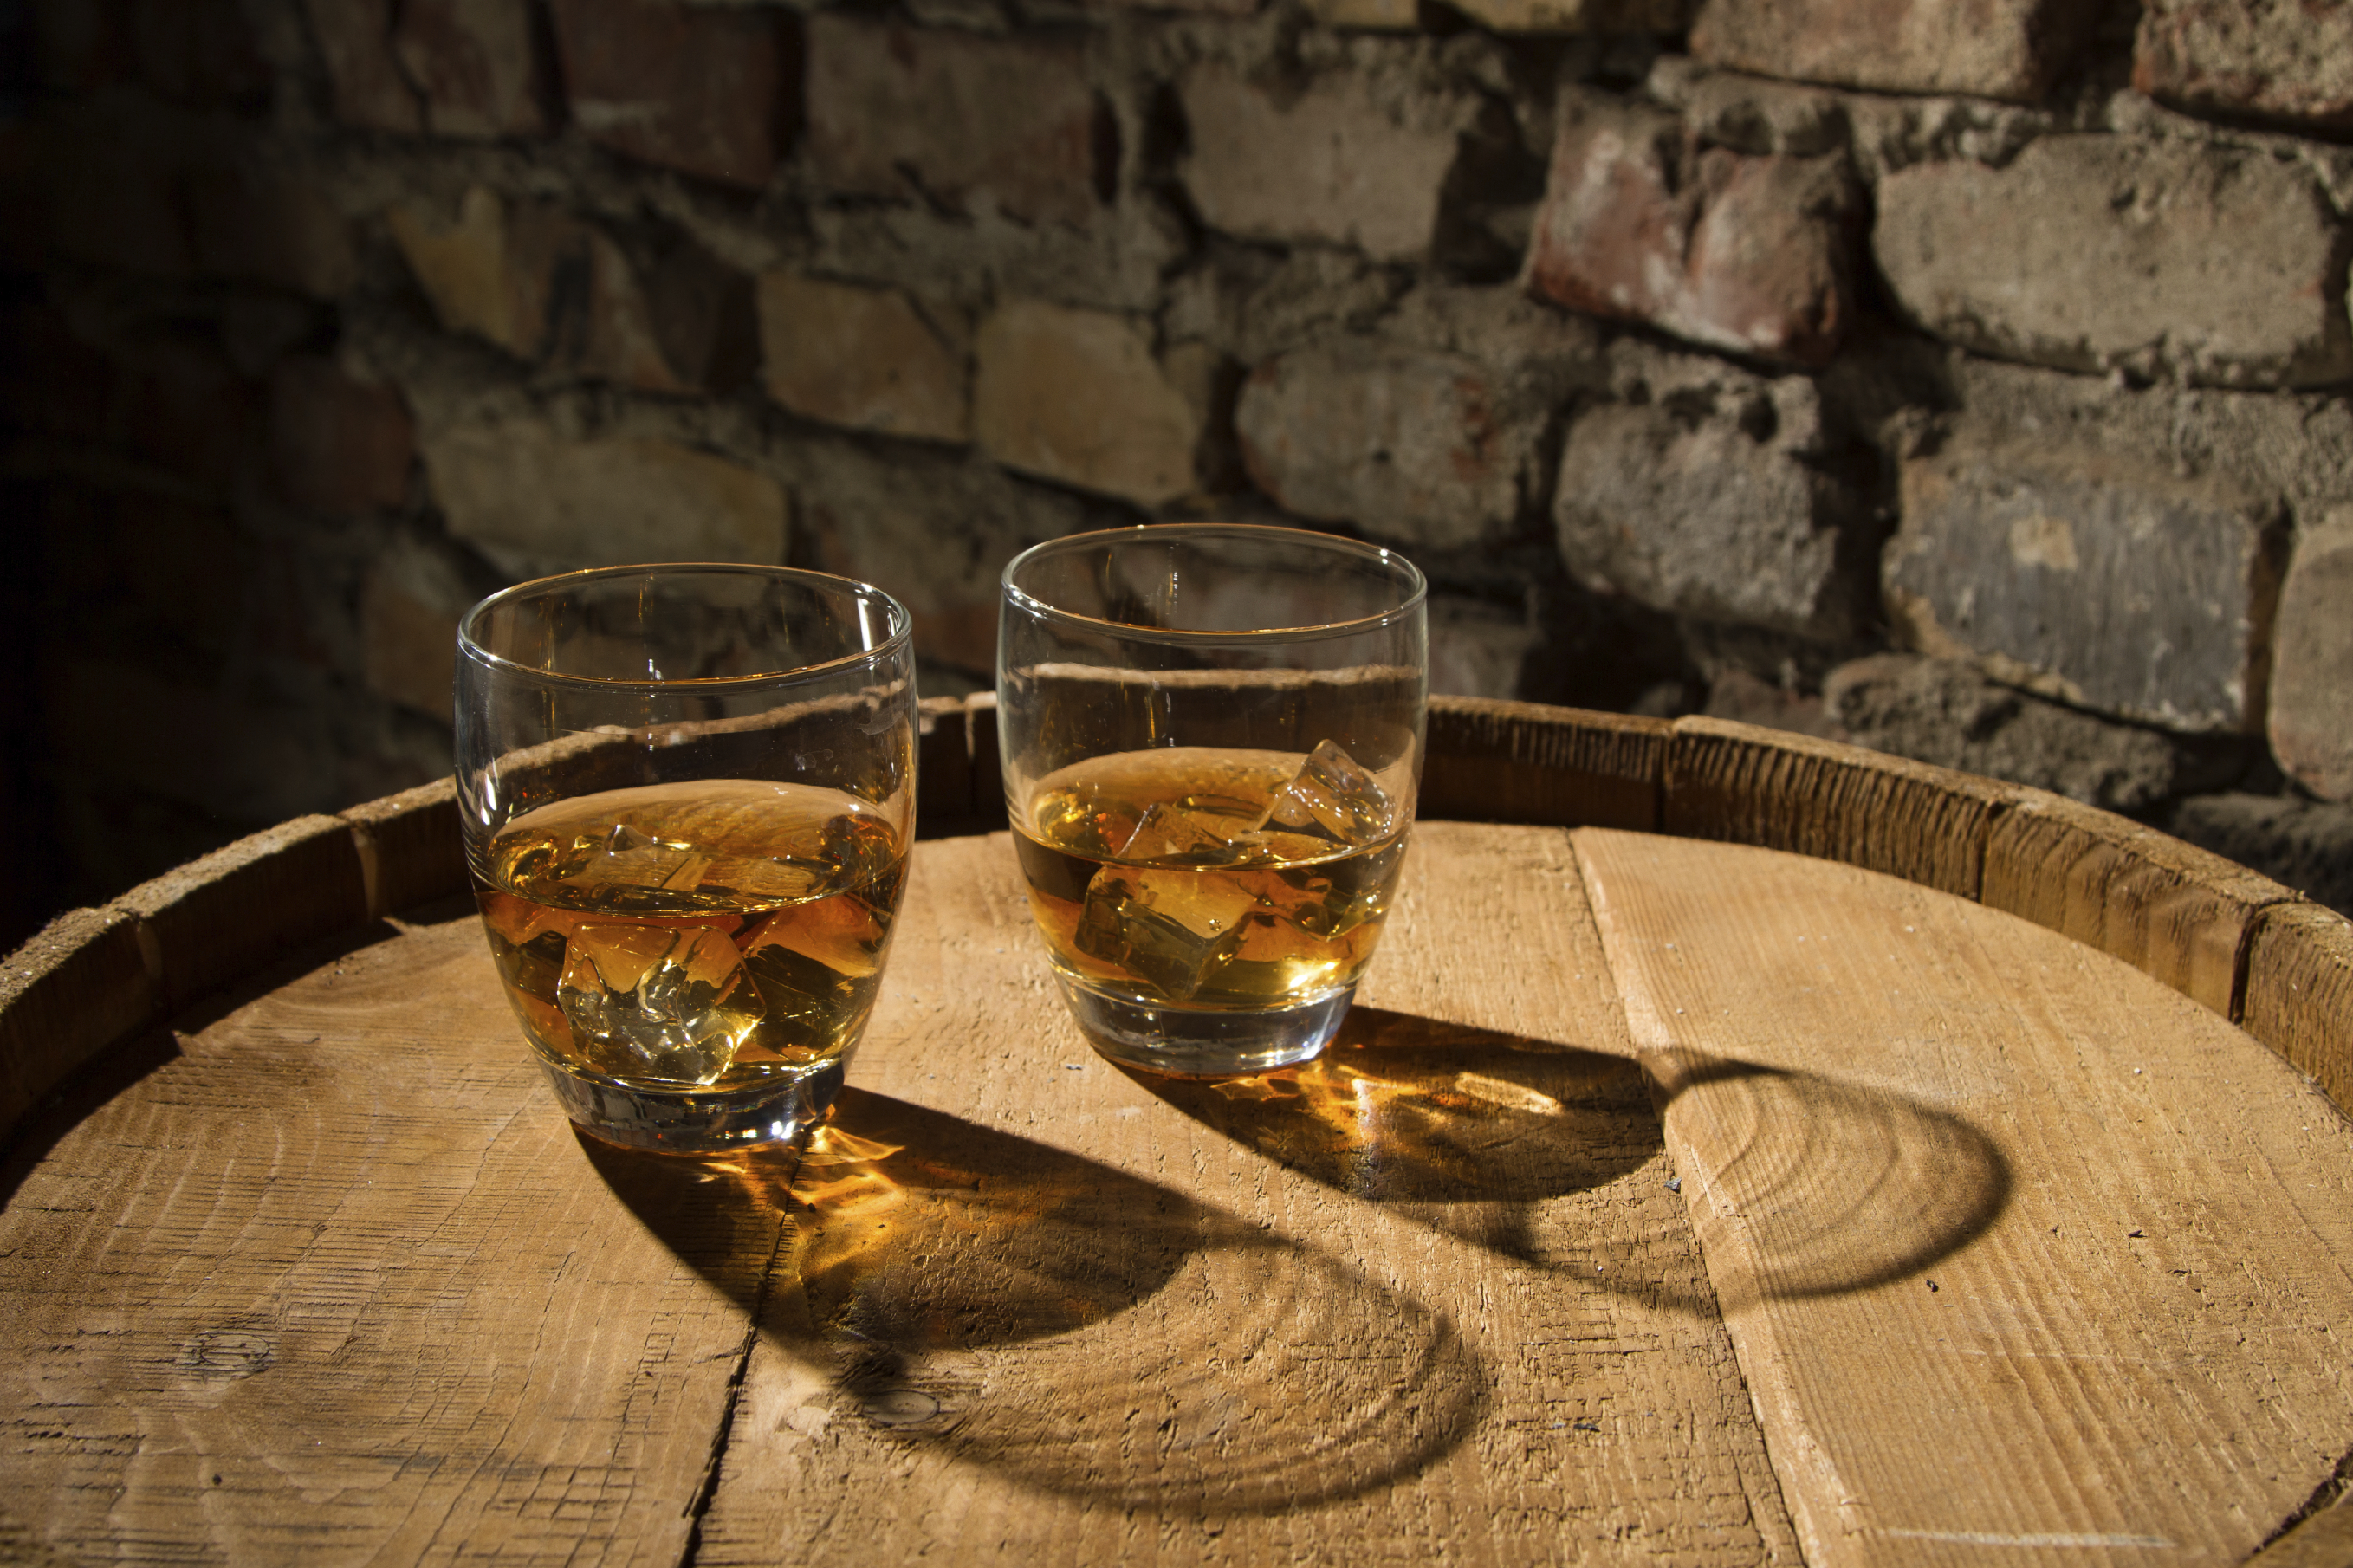 Two glasses of wihisky